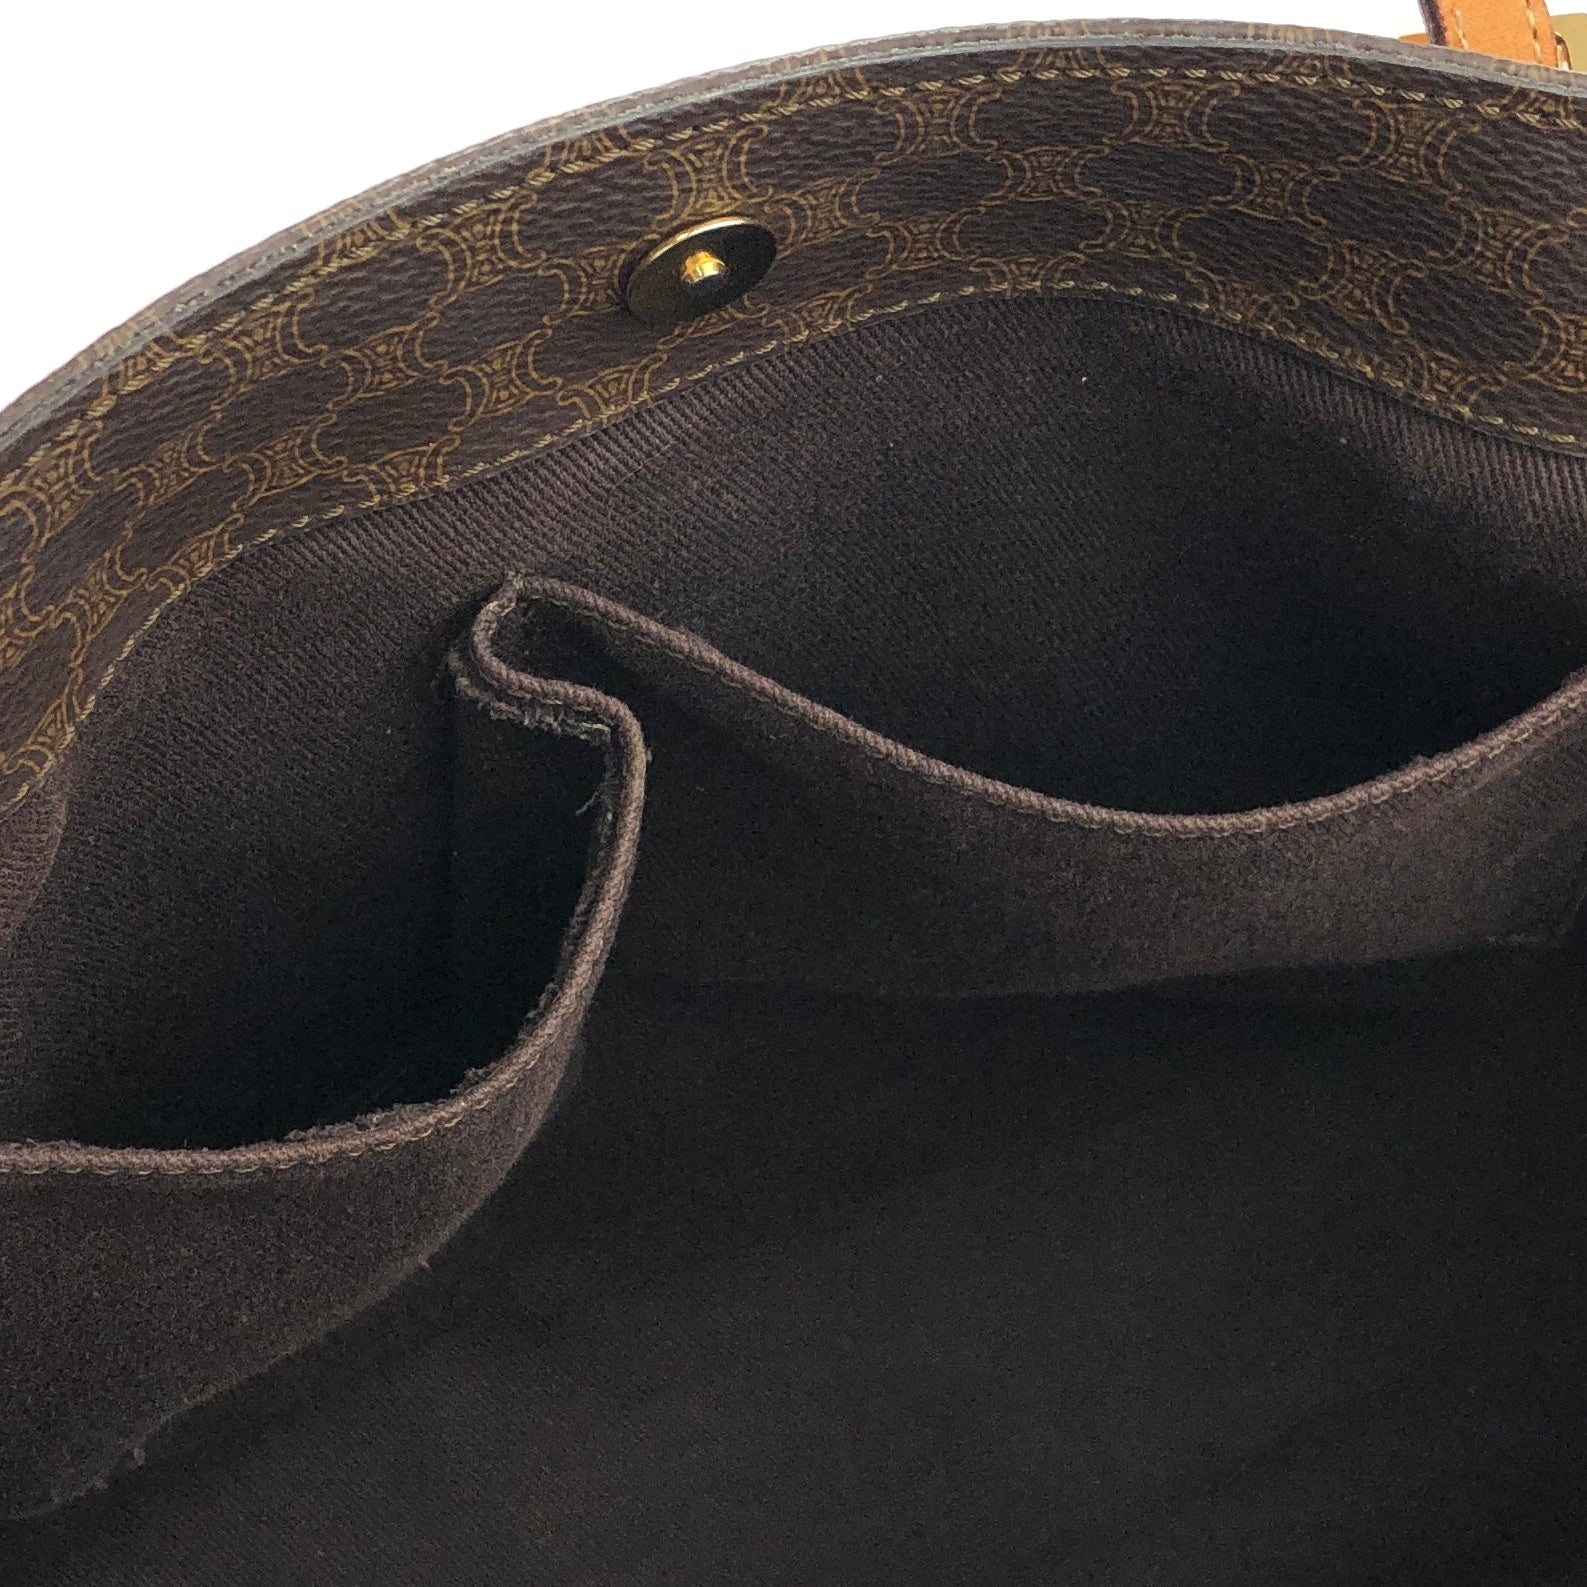 Céline Vintage - Macadam Jacquard Tote Bag - Black - Leather and